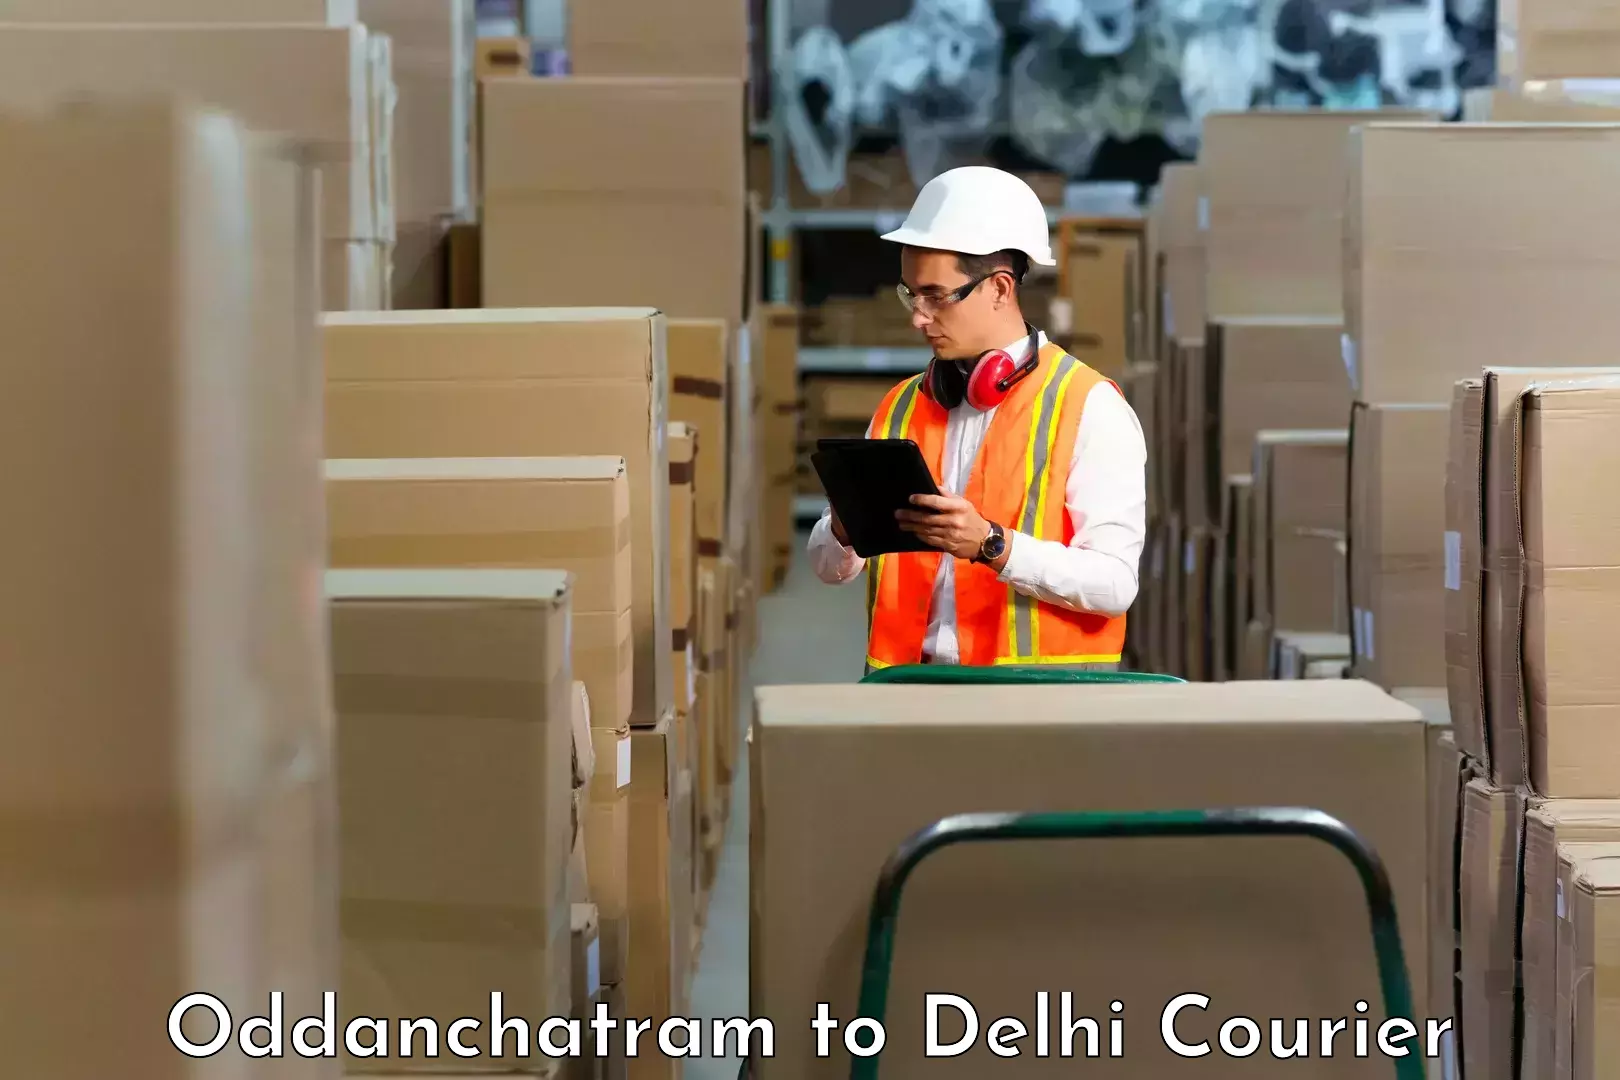 High-efficiency logistics Oddanchatram to NCR